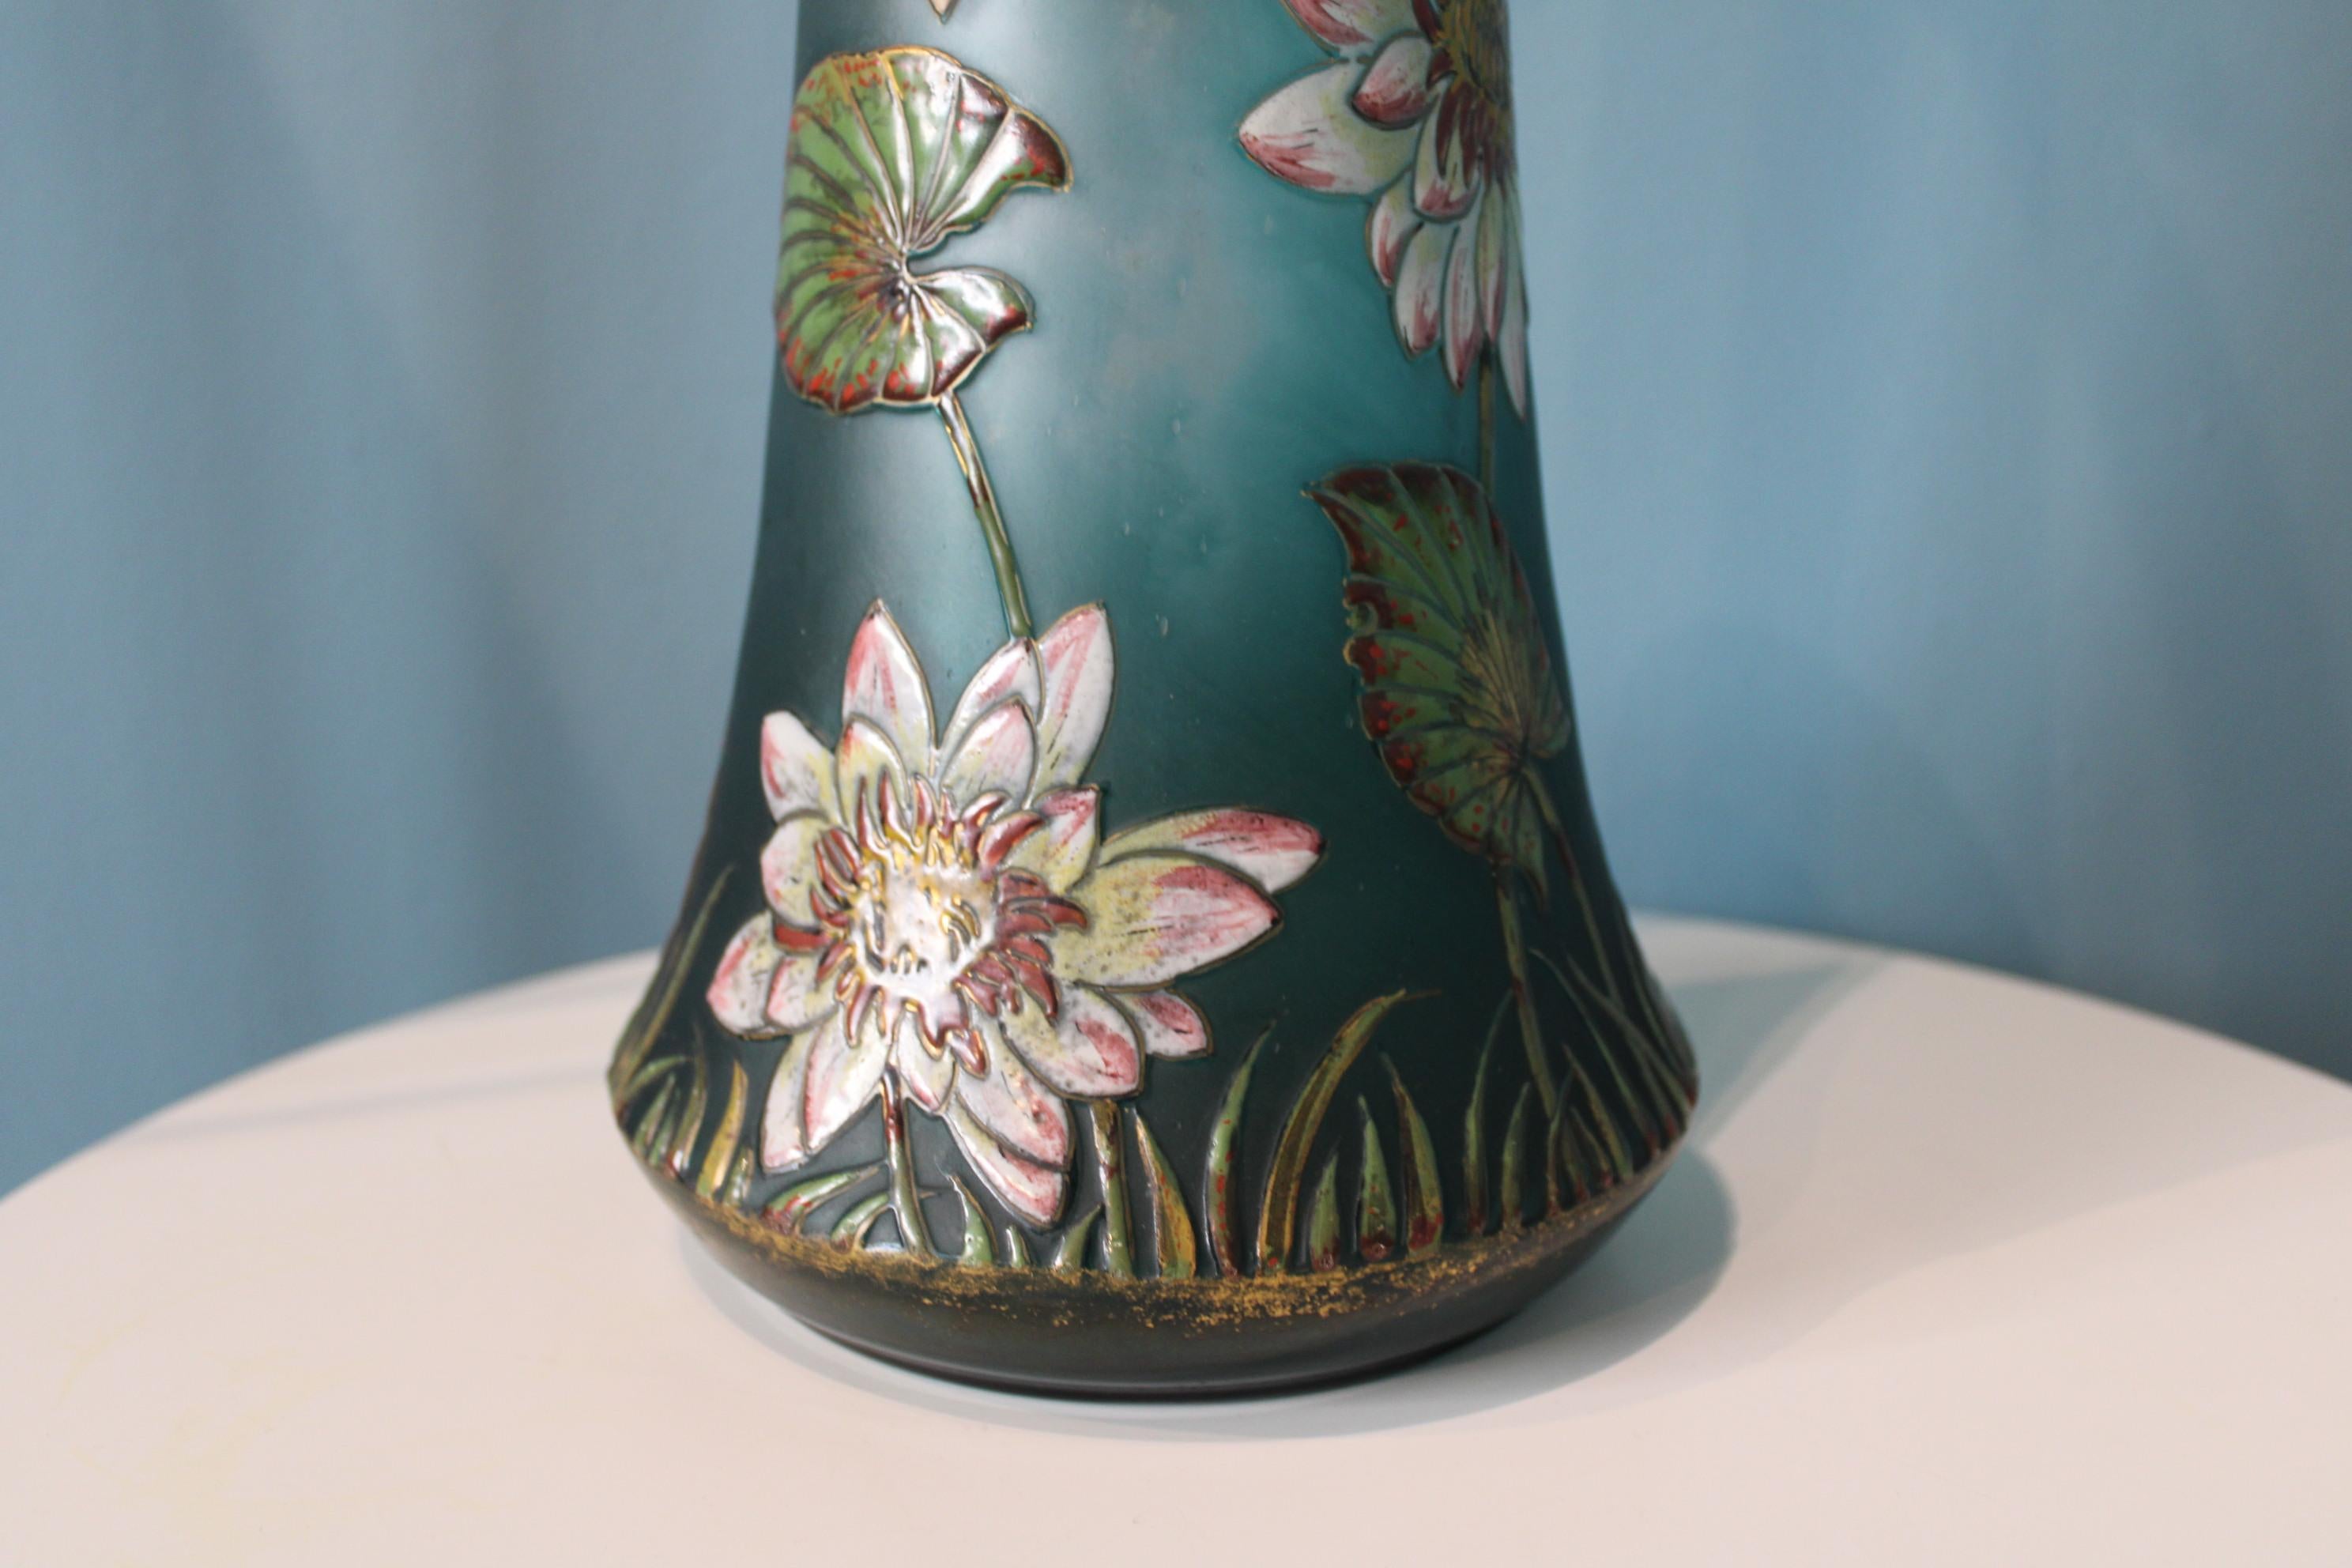 Burgun, Schverer & Cie glass vase, France 1